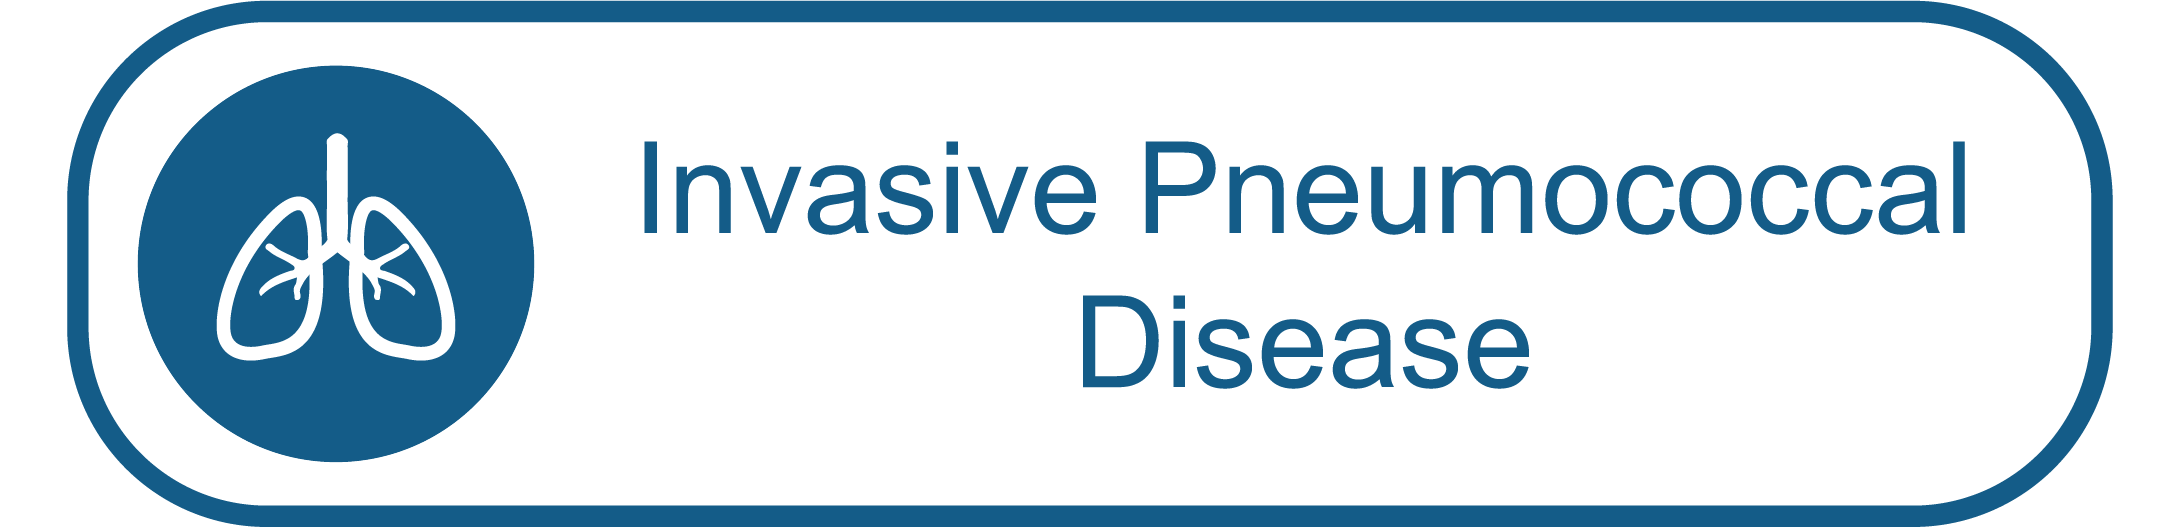 Invasive Pneumococcal Disease